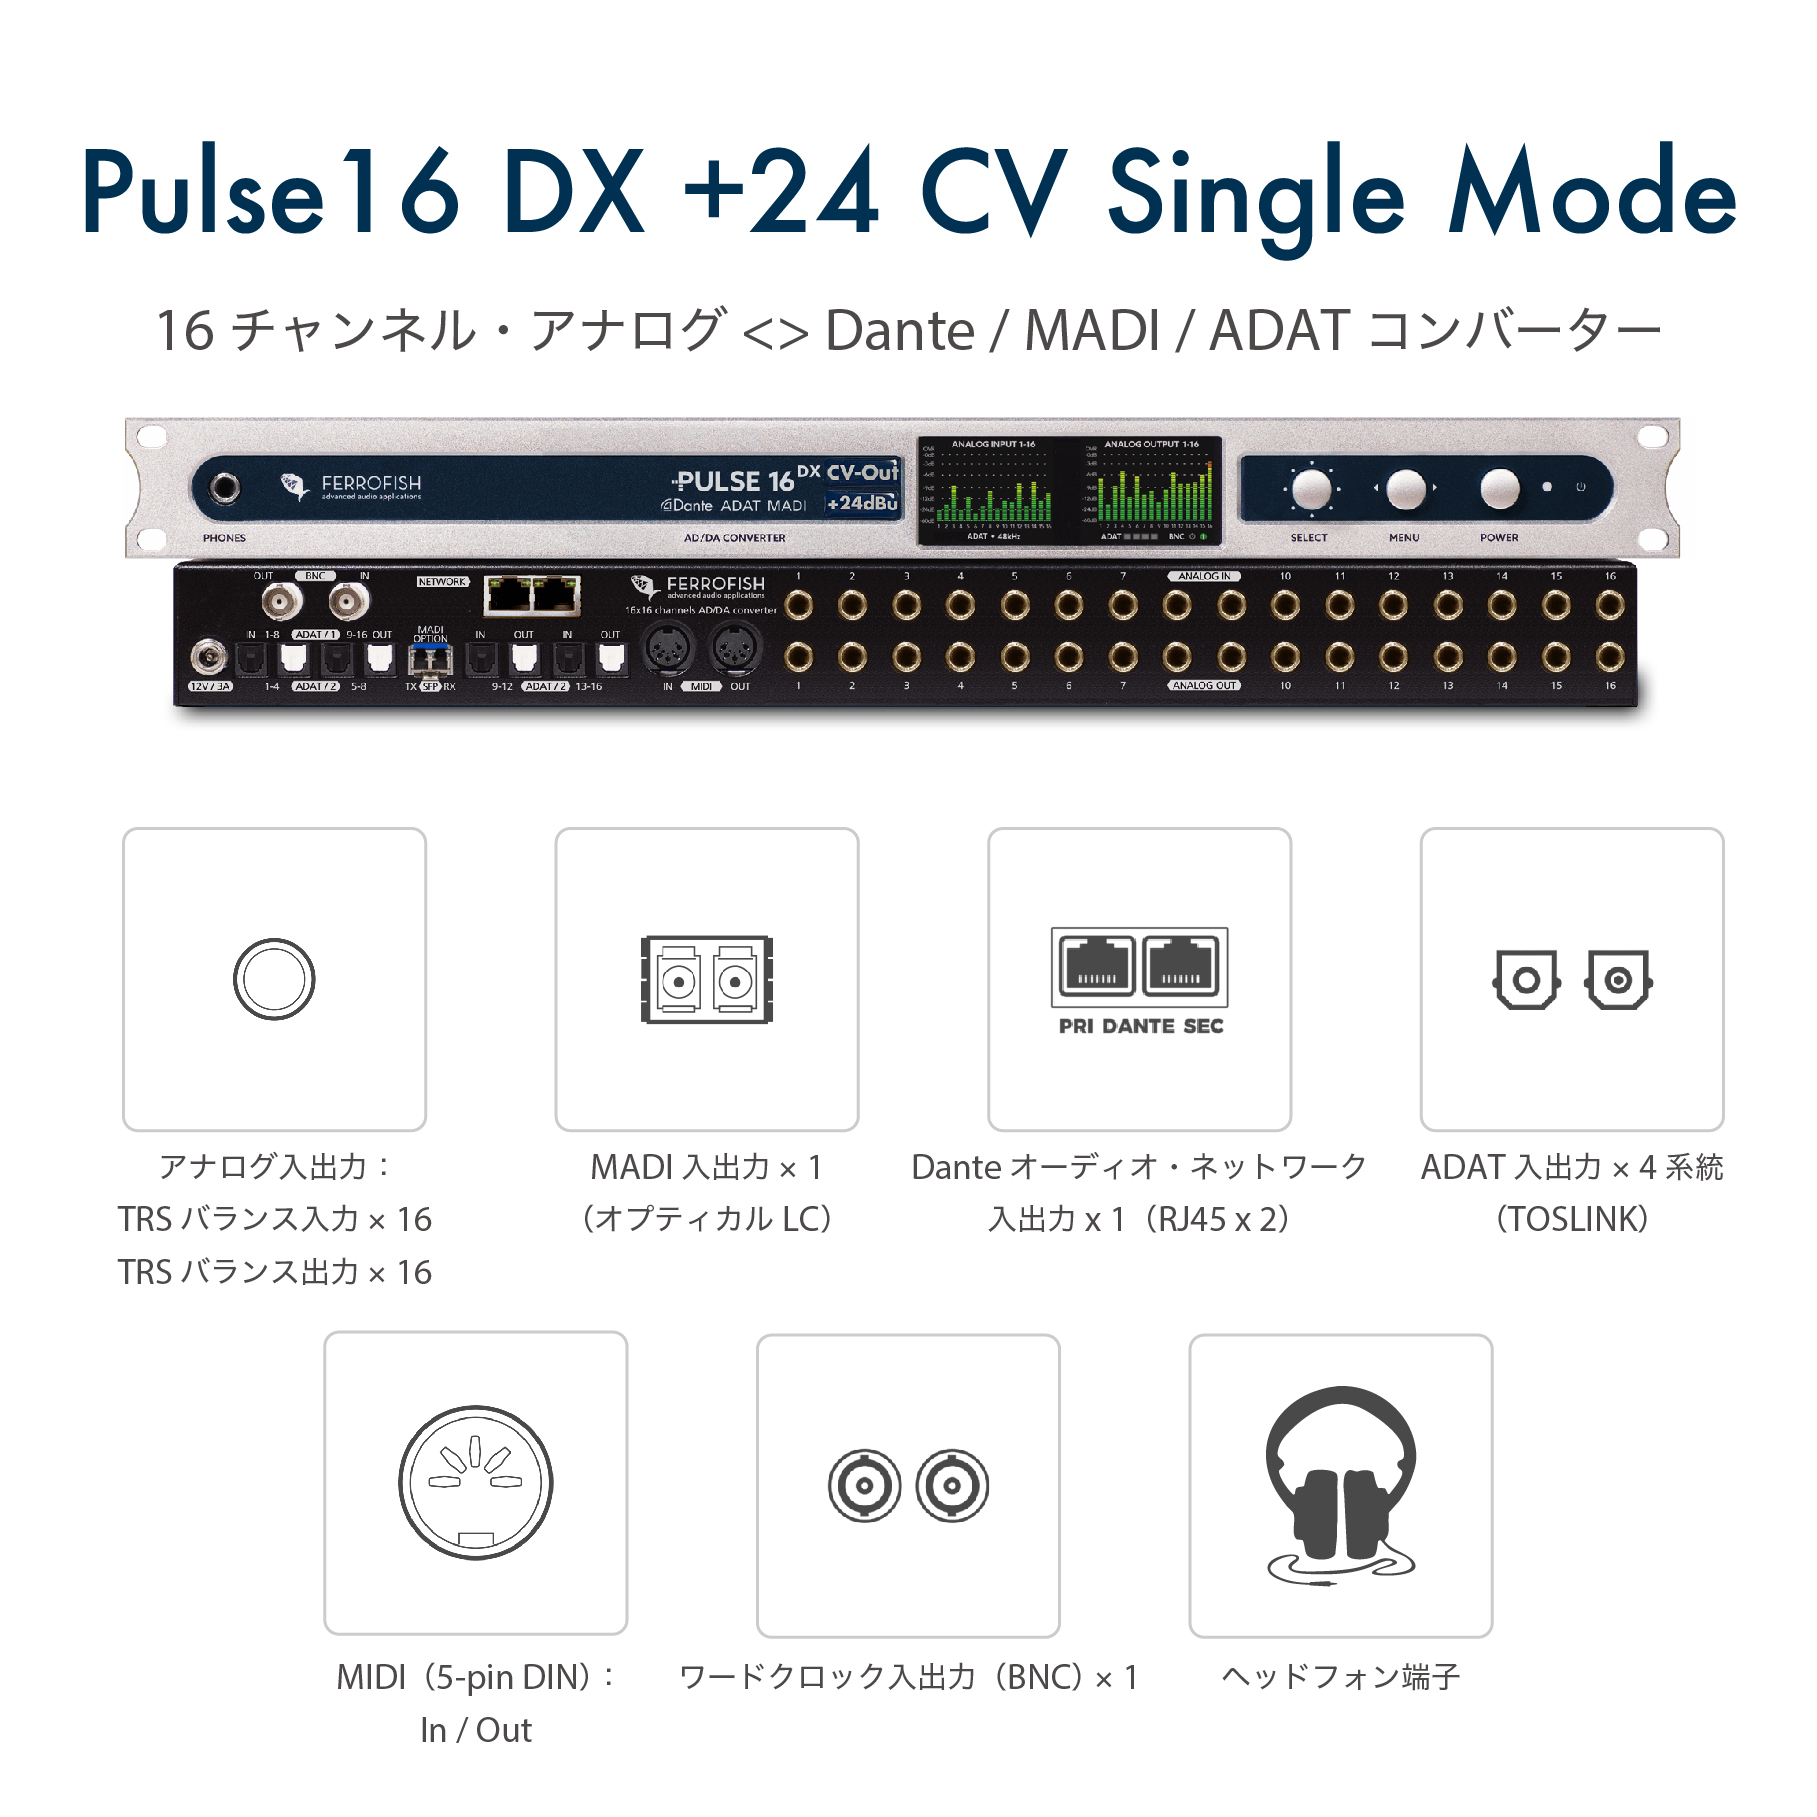 Pulse16 DX +24 CV Single Mode